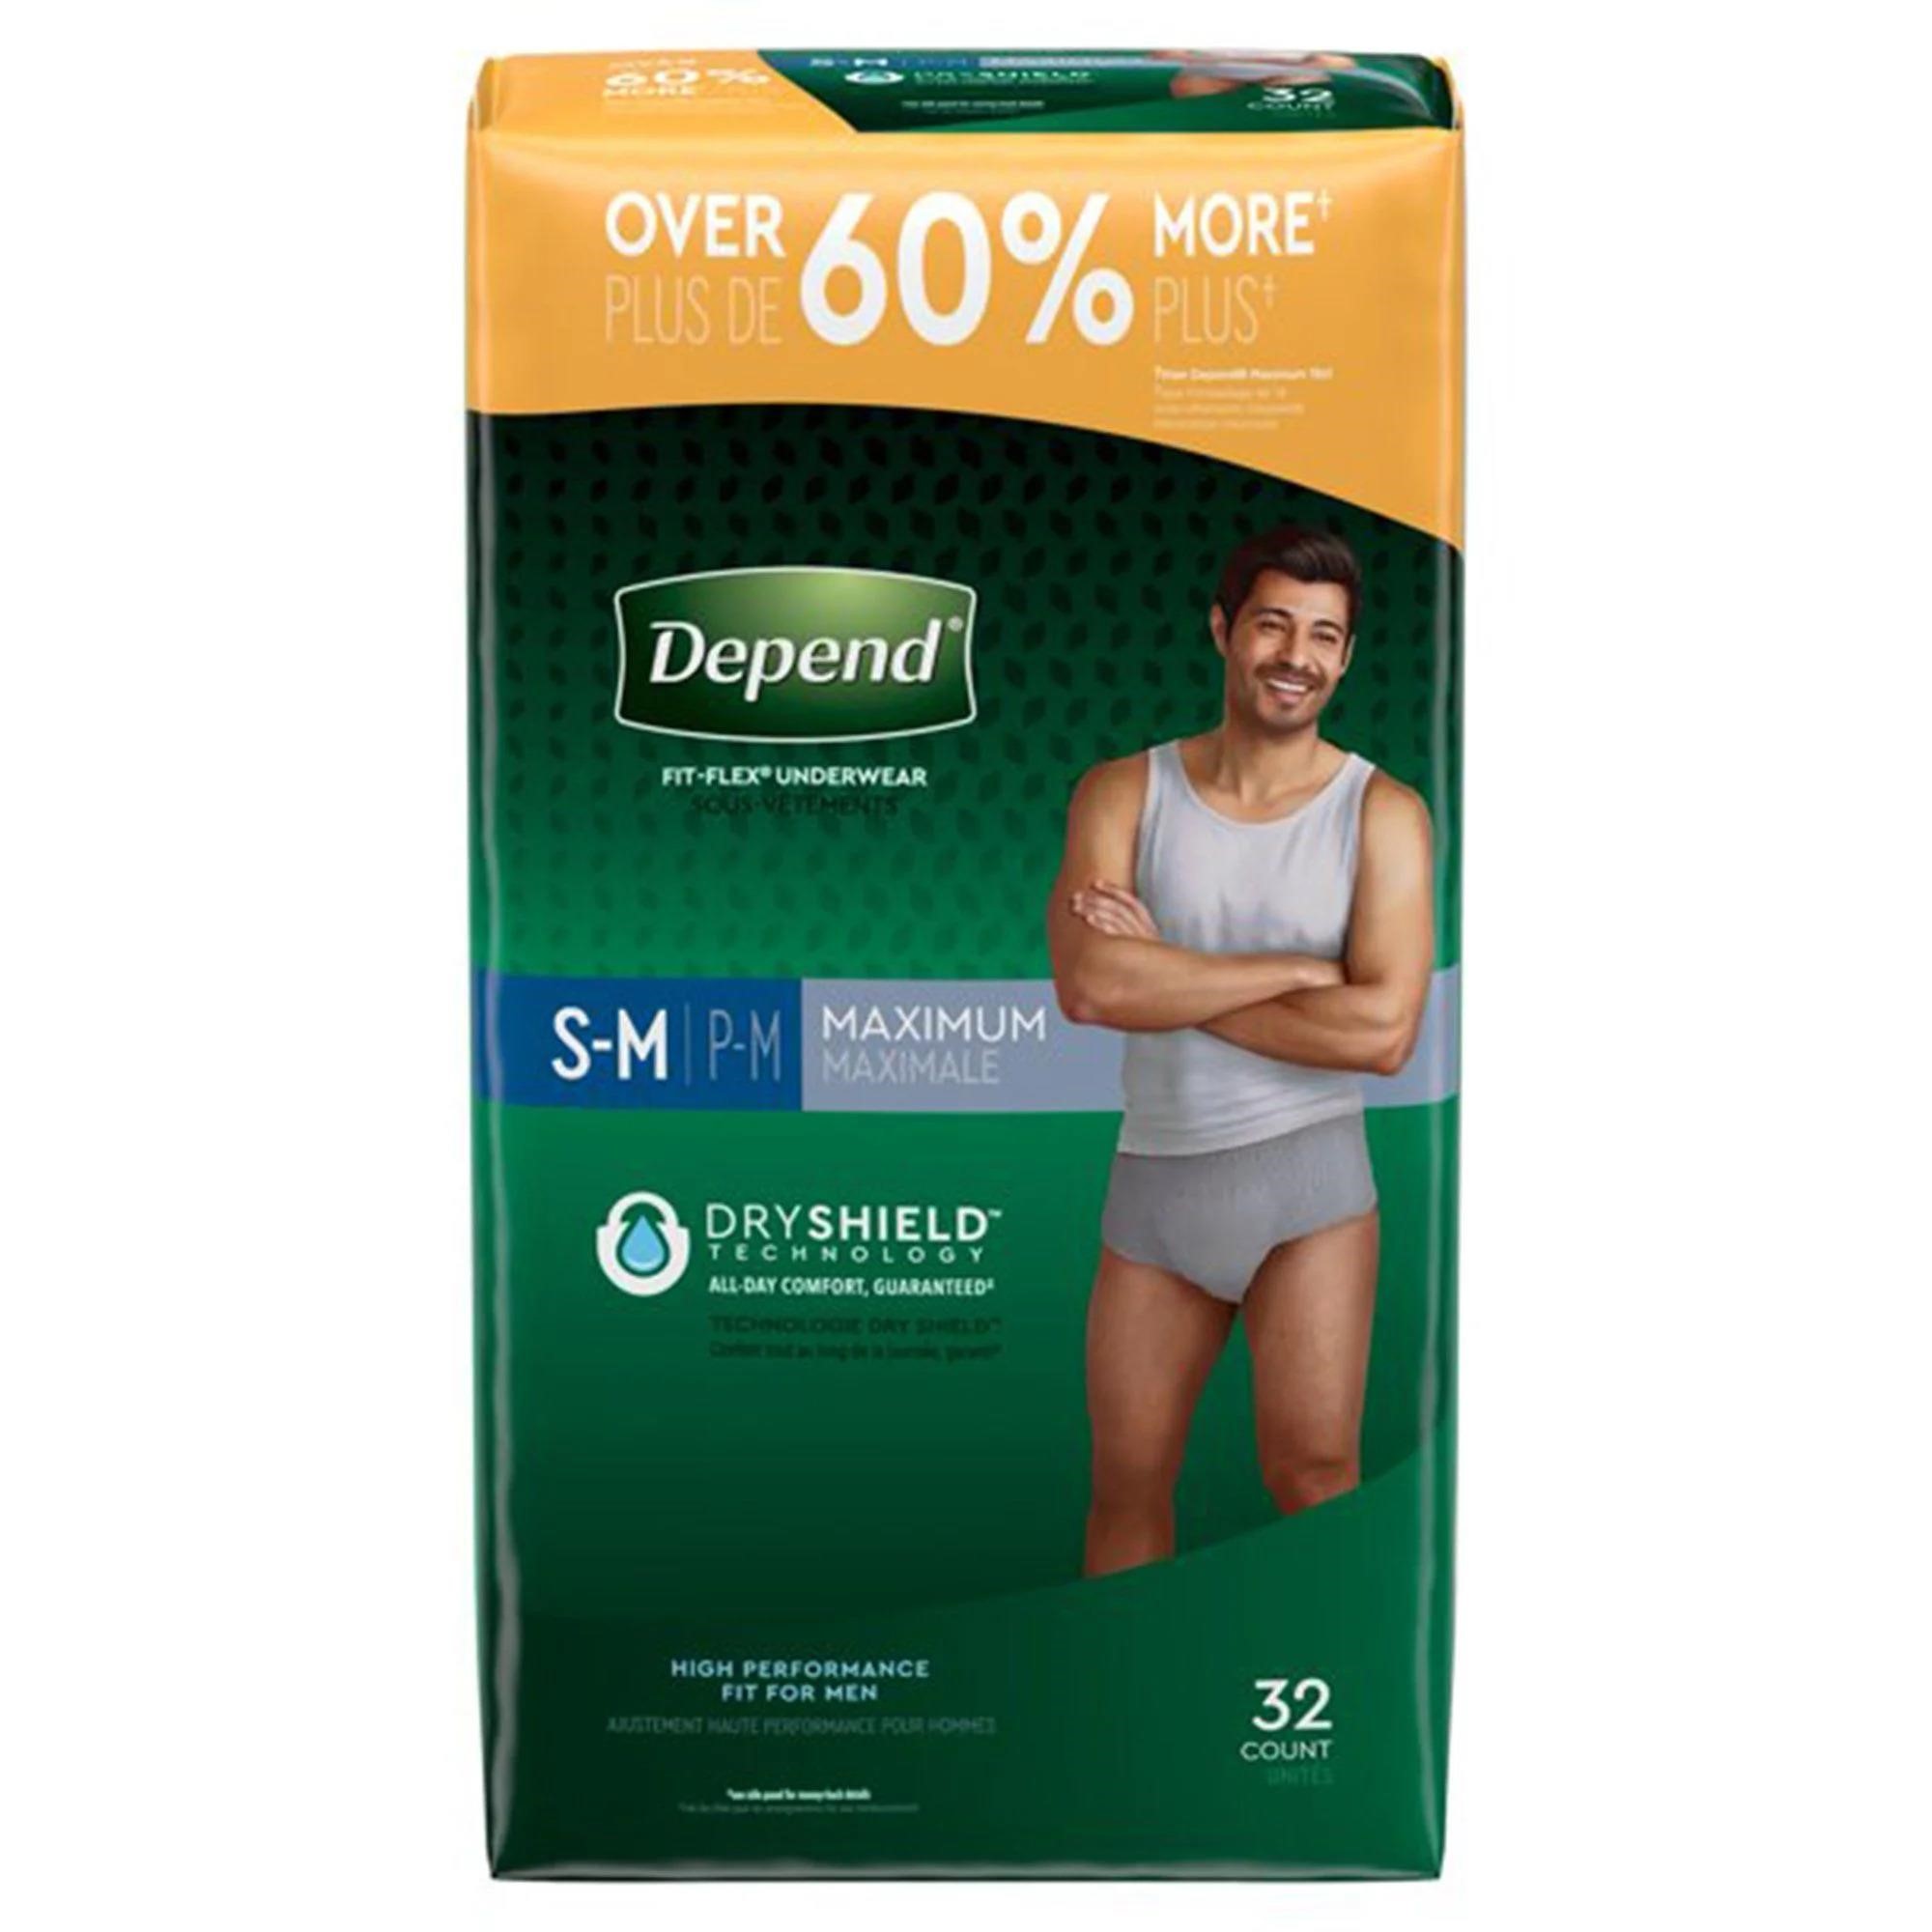 Depend FIT-FLEX Underwear Maximum for Men, S/M